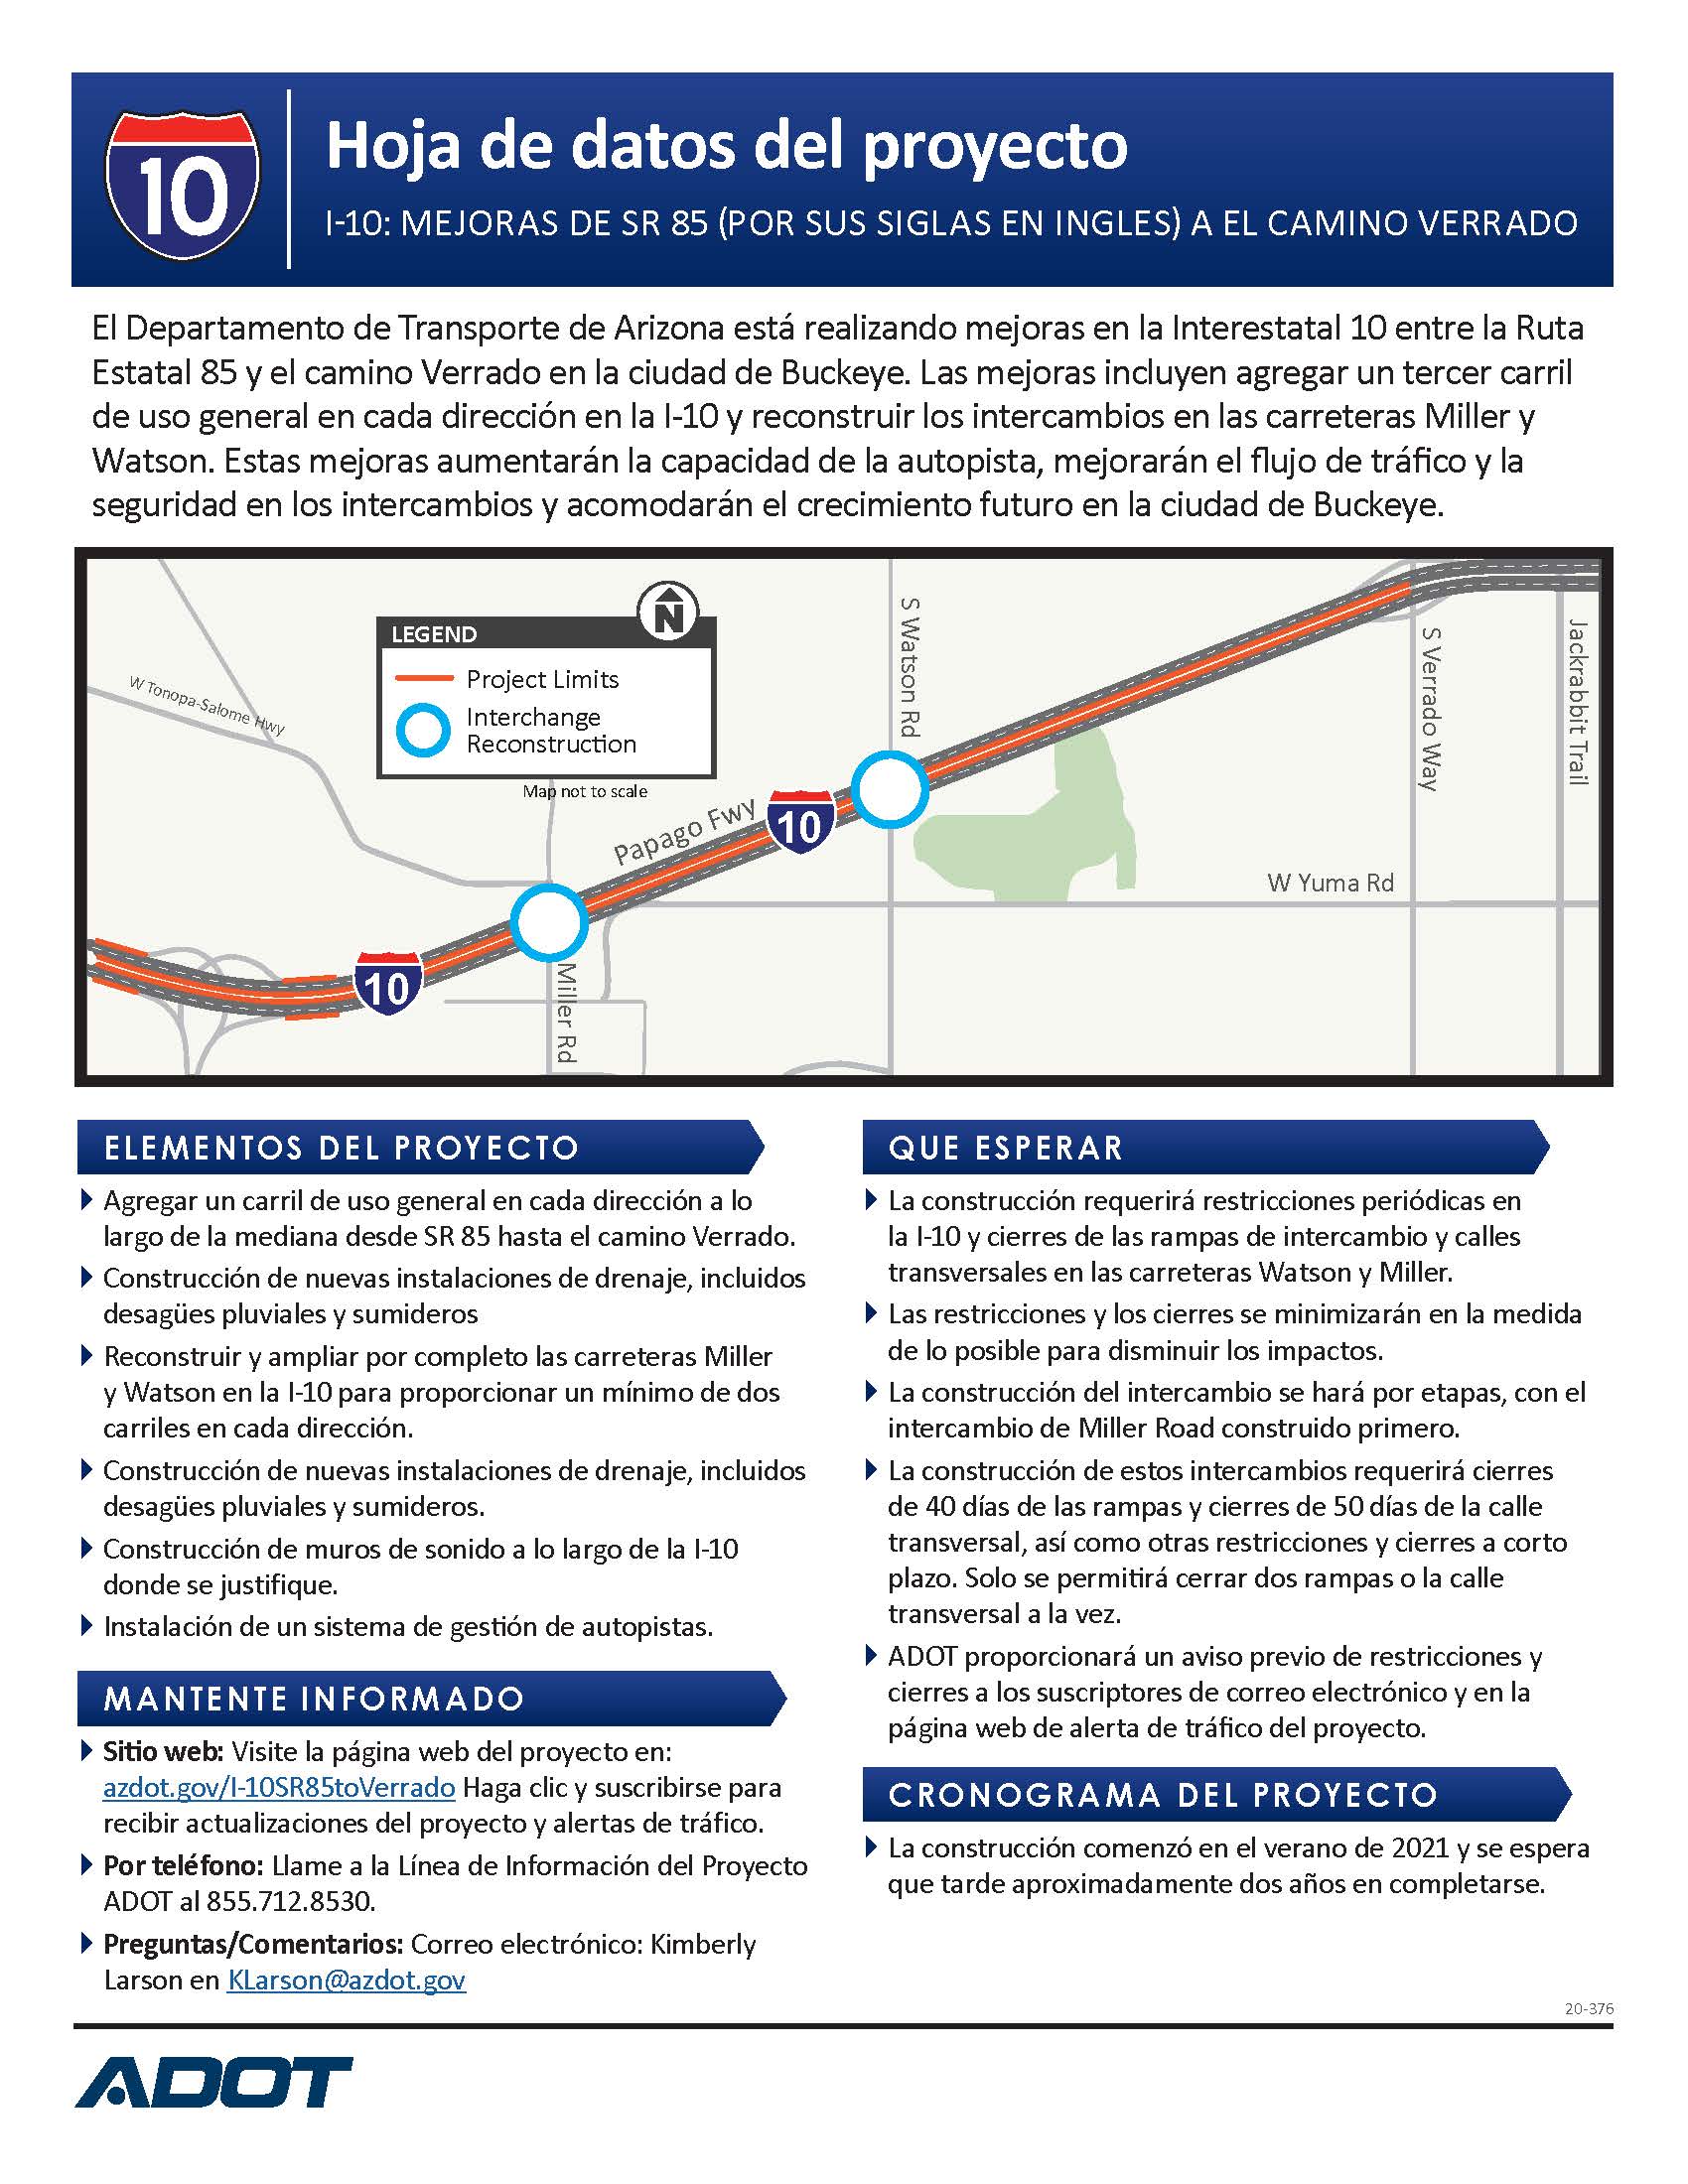 I-10 SR 85 to Verrado Way Fact Sheet Spanish